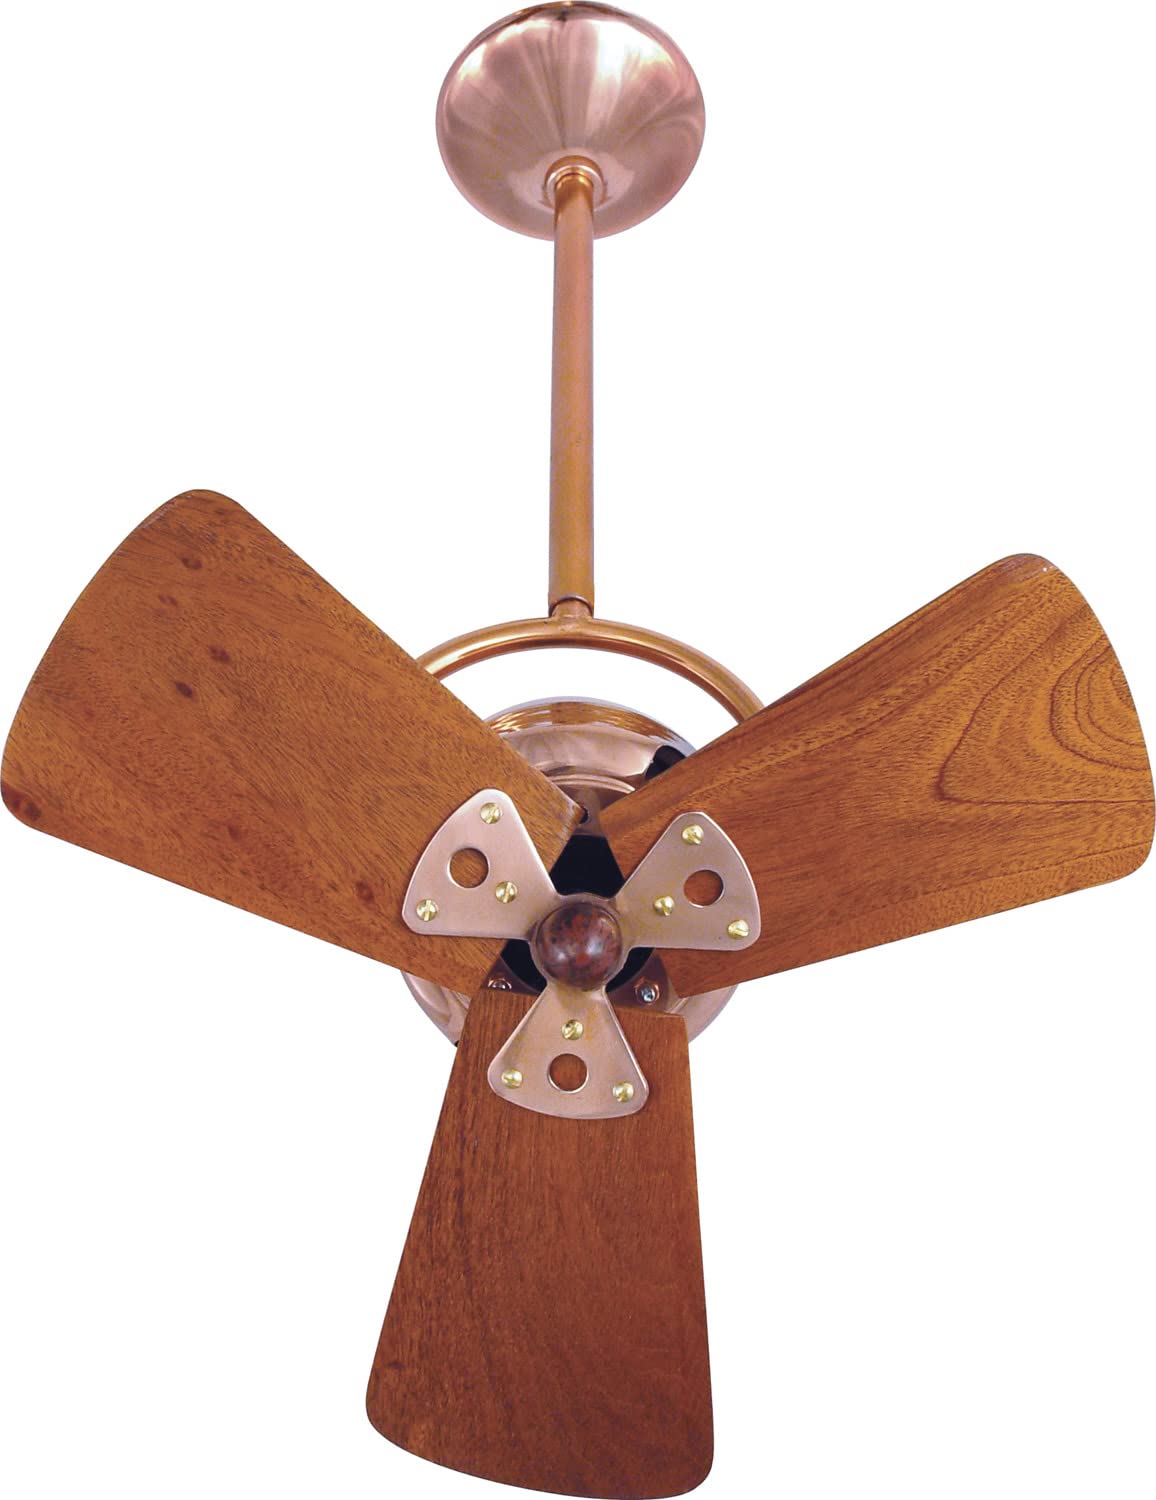 Matthews Fan BD-GREEN-WD Bianca Direcional ceiling fan in Esmerelda (Green) finish with solid sustainable mahogany wood blades.